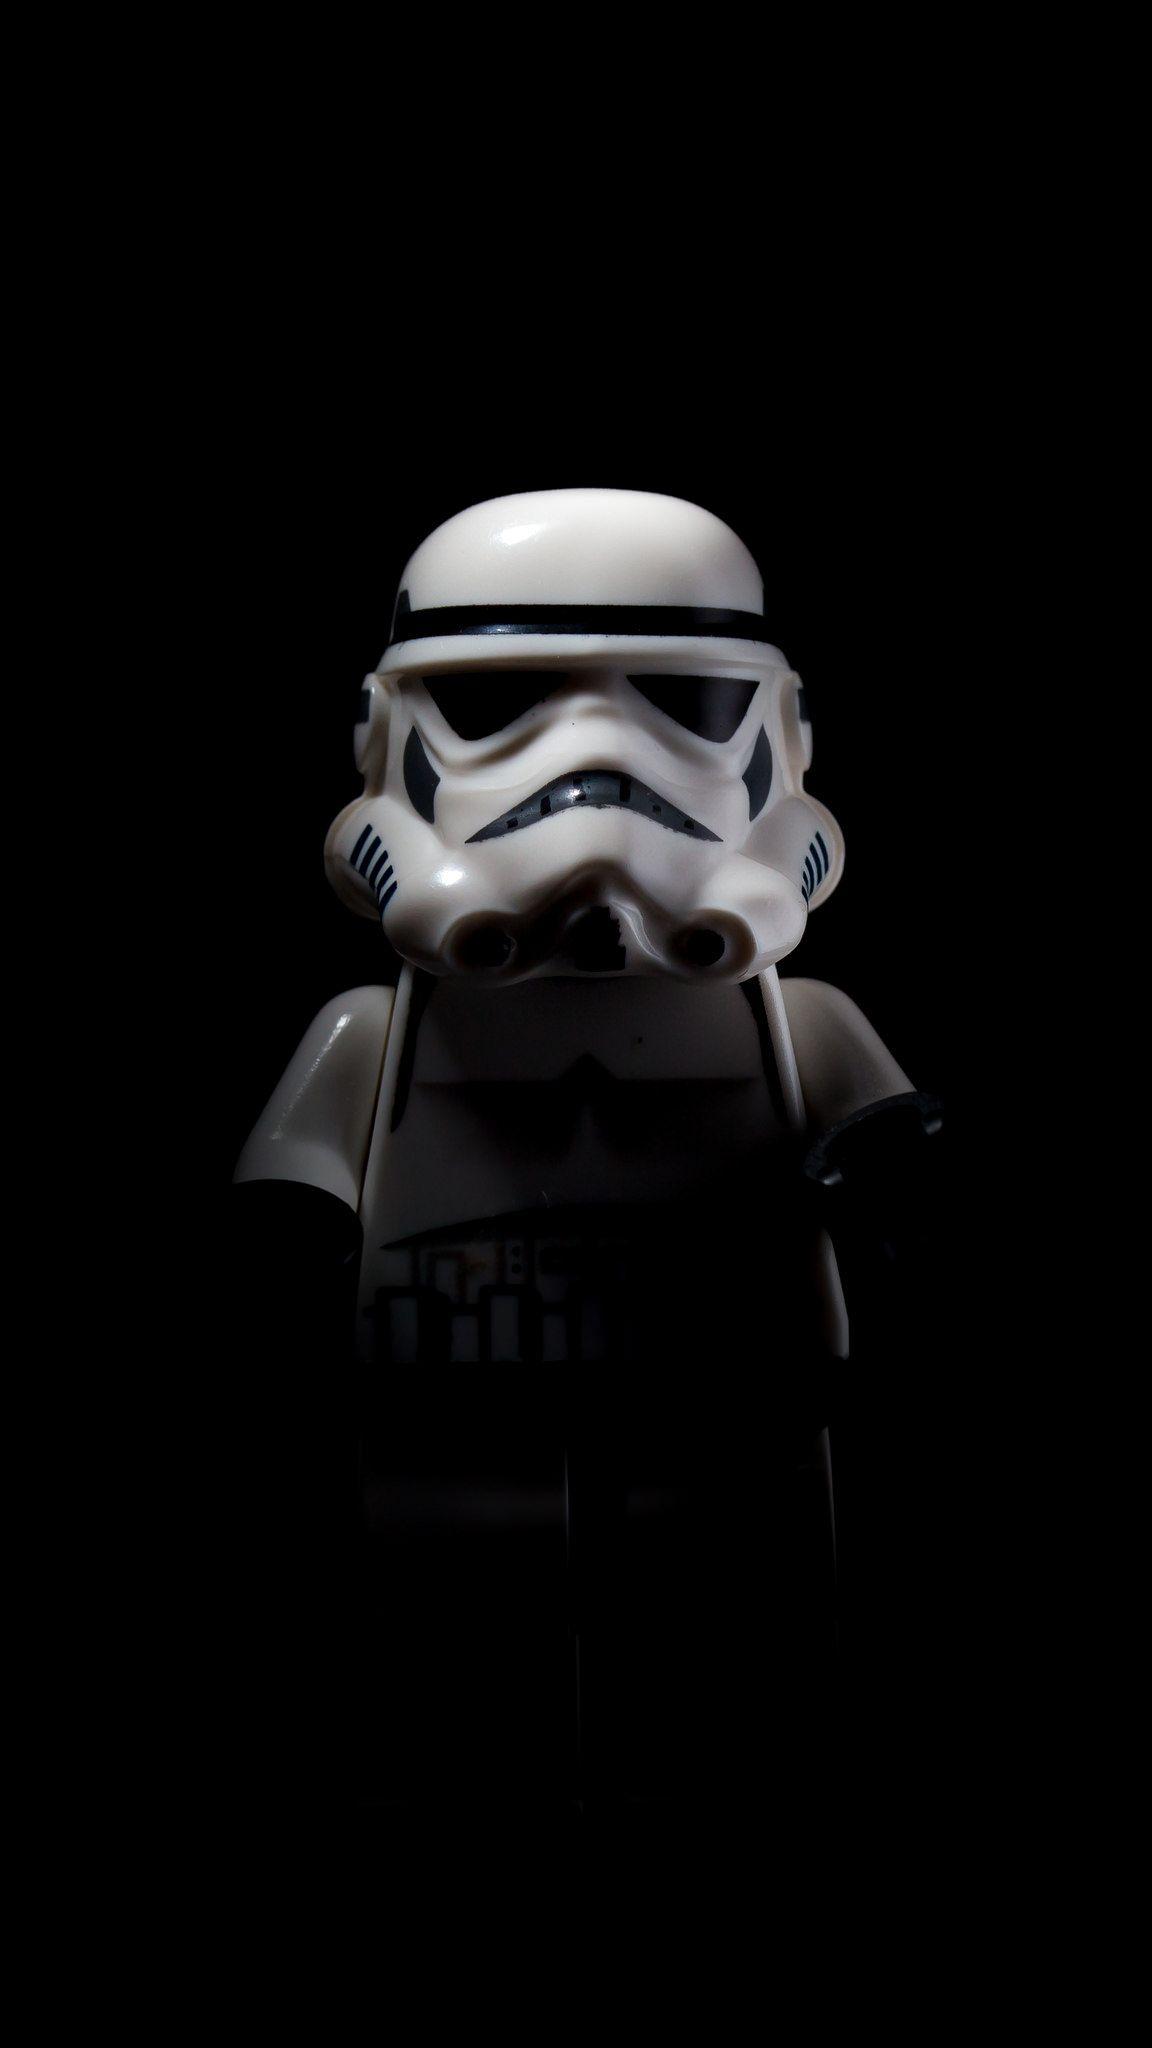 Star Wars trooper wallpaper HD wallpapers free download | Wallpaperbetter